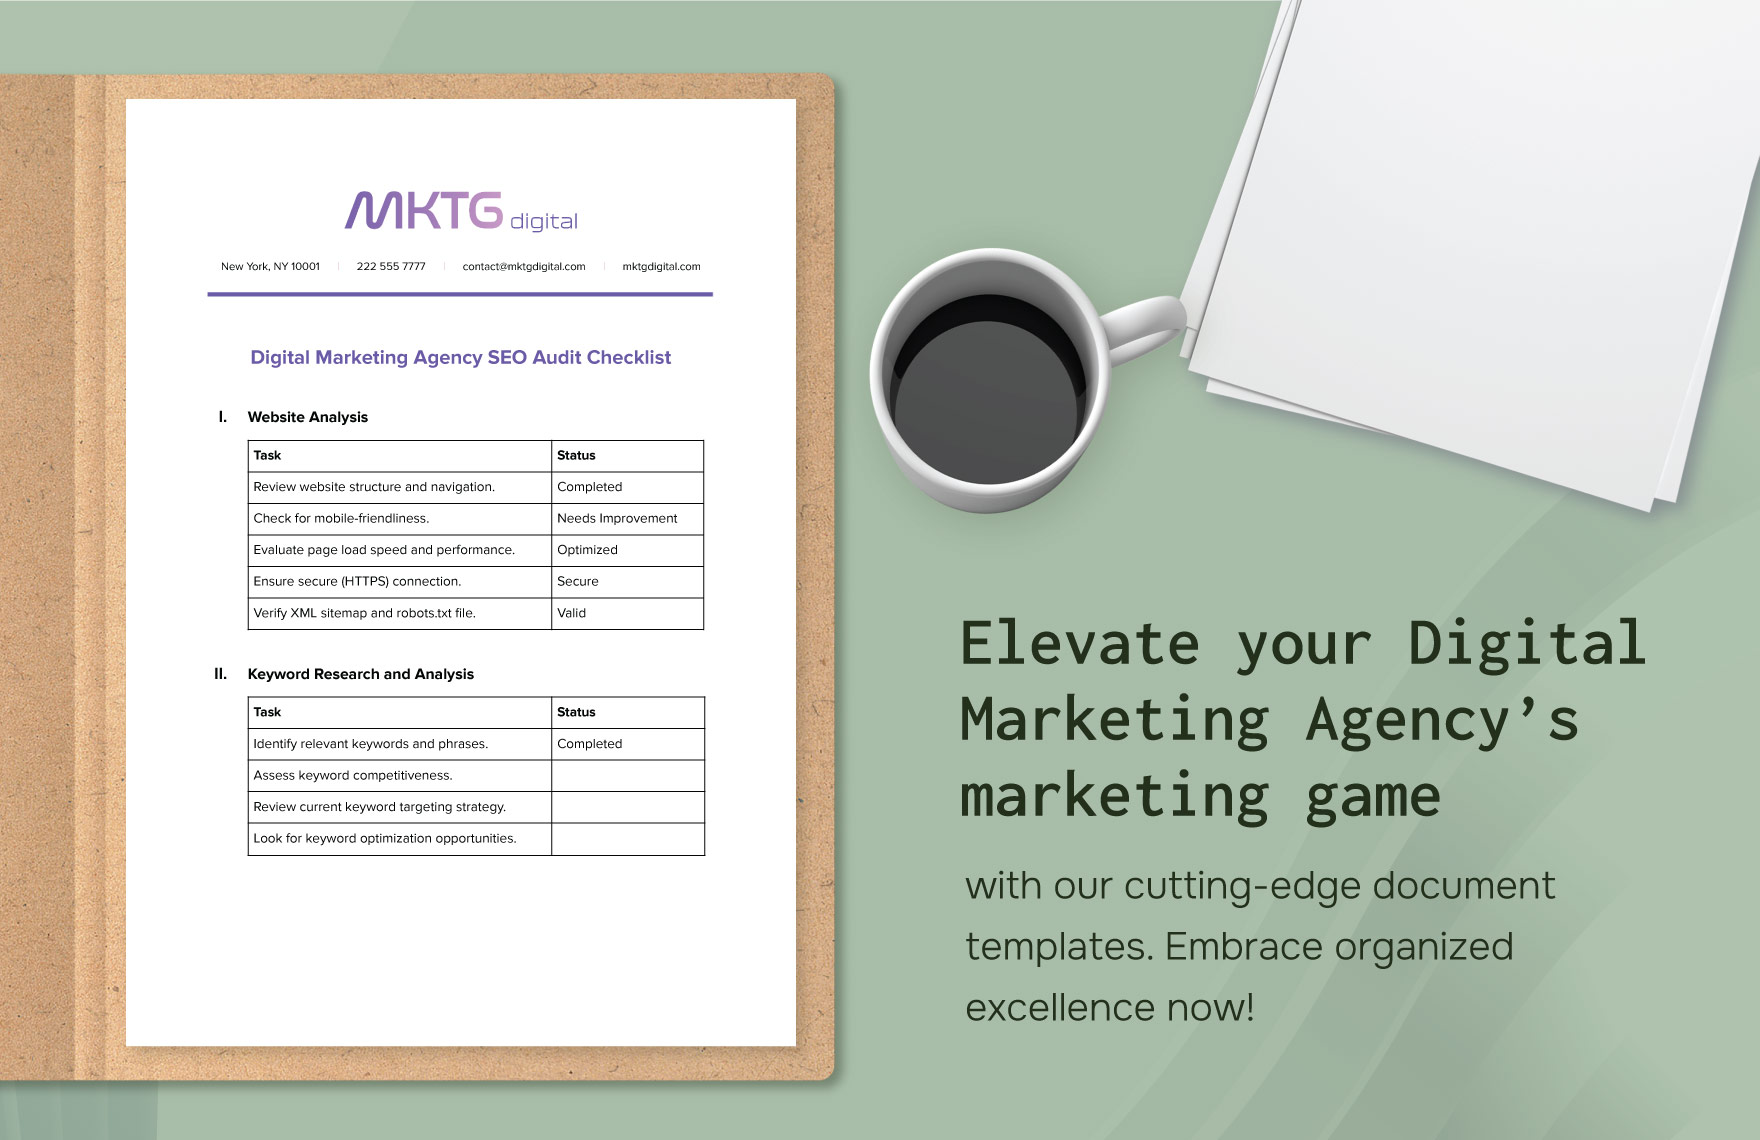 Digital Marketing Agency SEO Audit Checklist Template